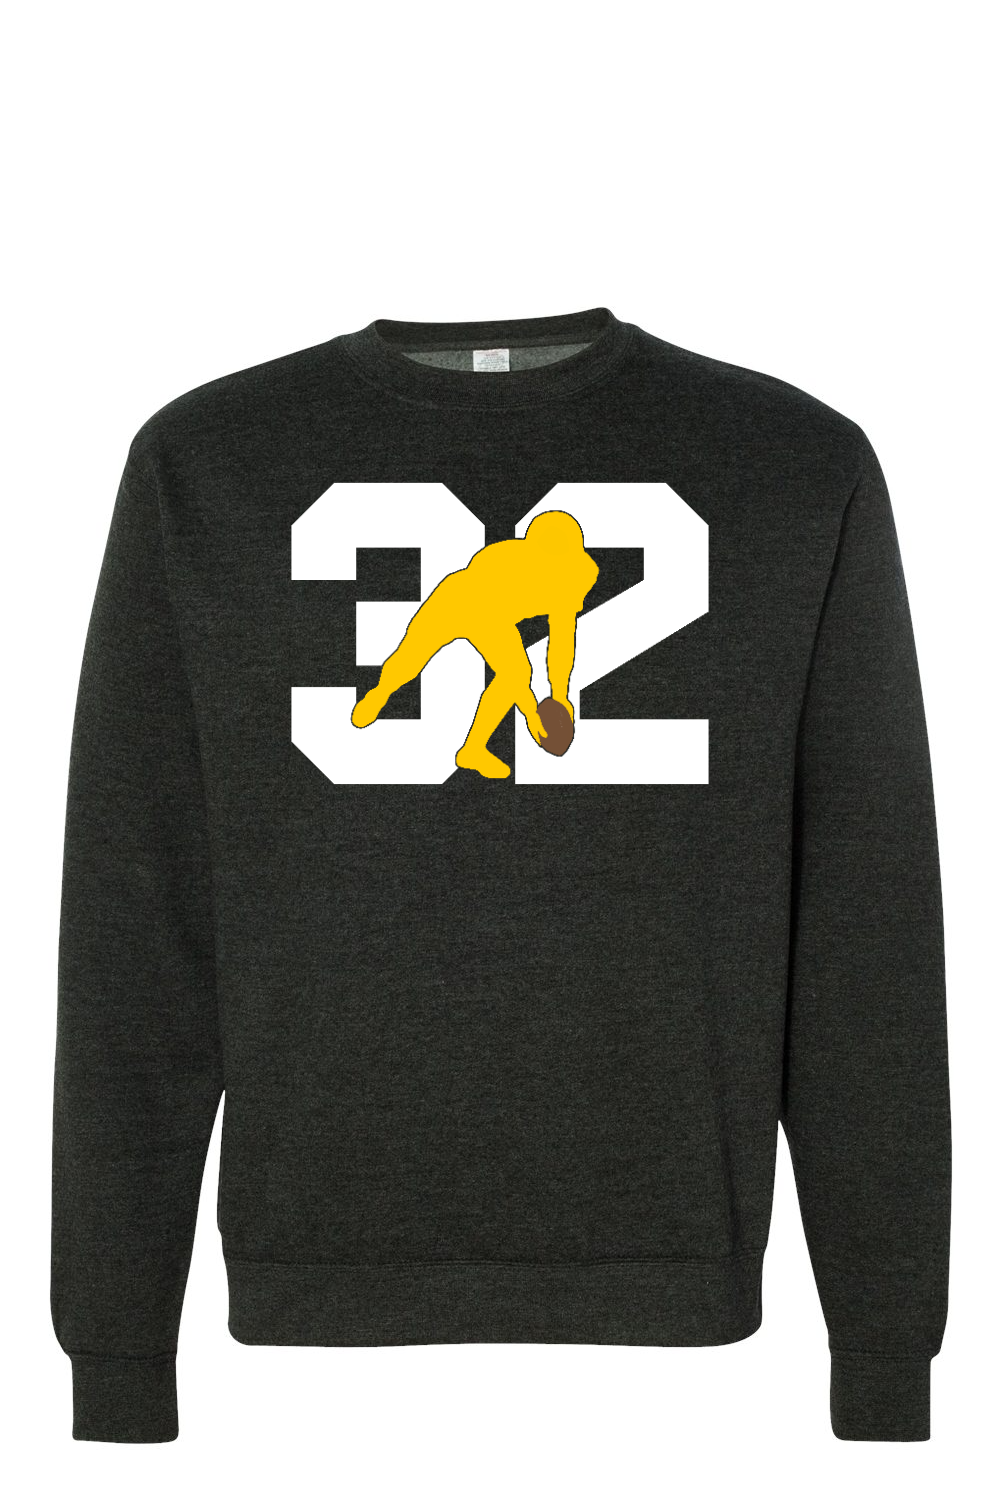 32 Forever - Premium Crewneck Sweatshirt - Yinzylvania